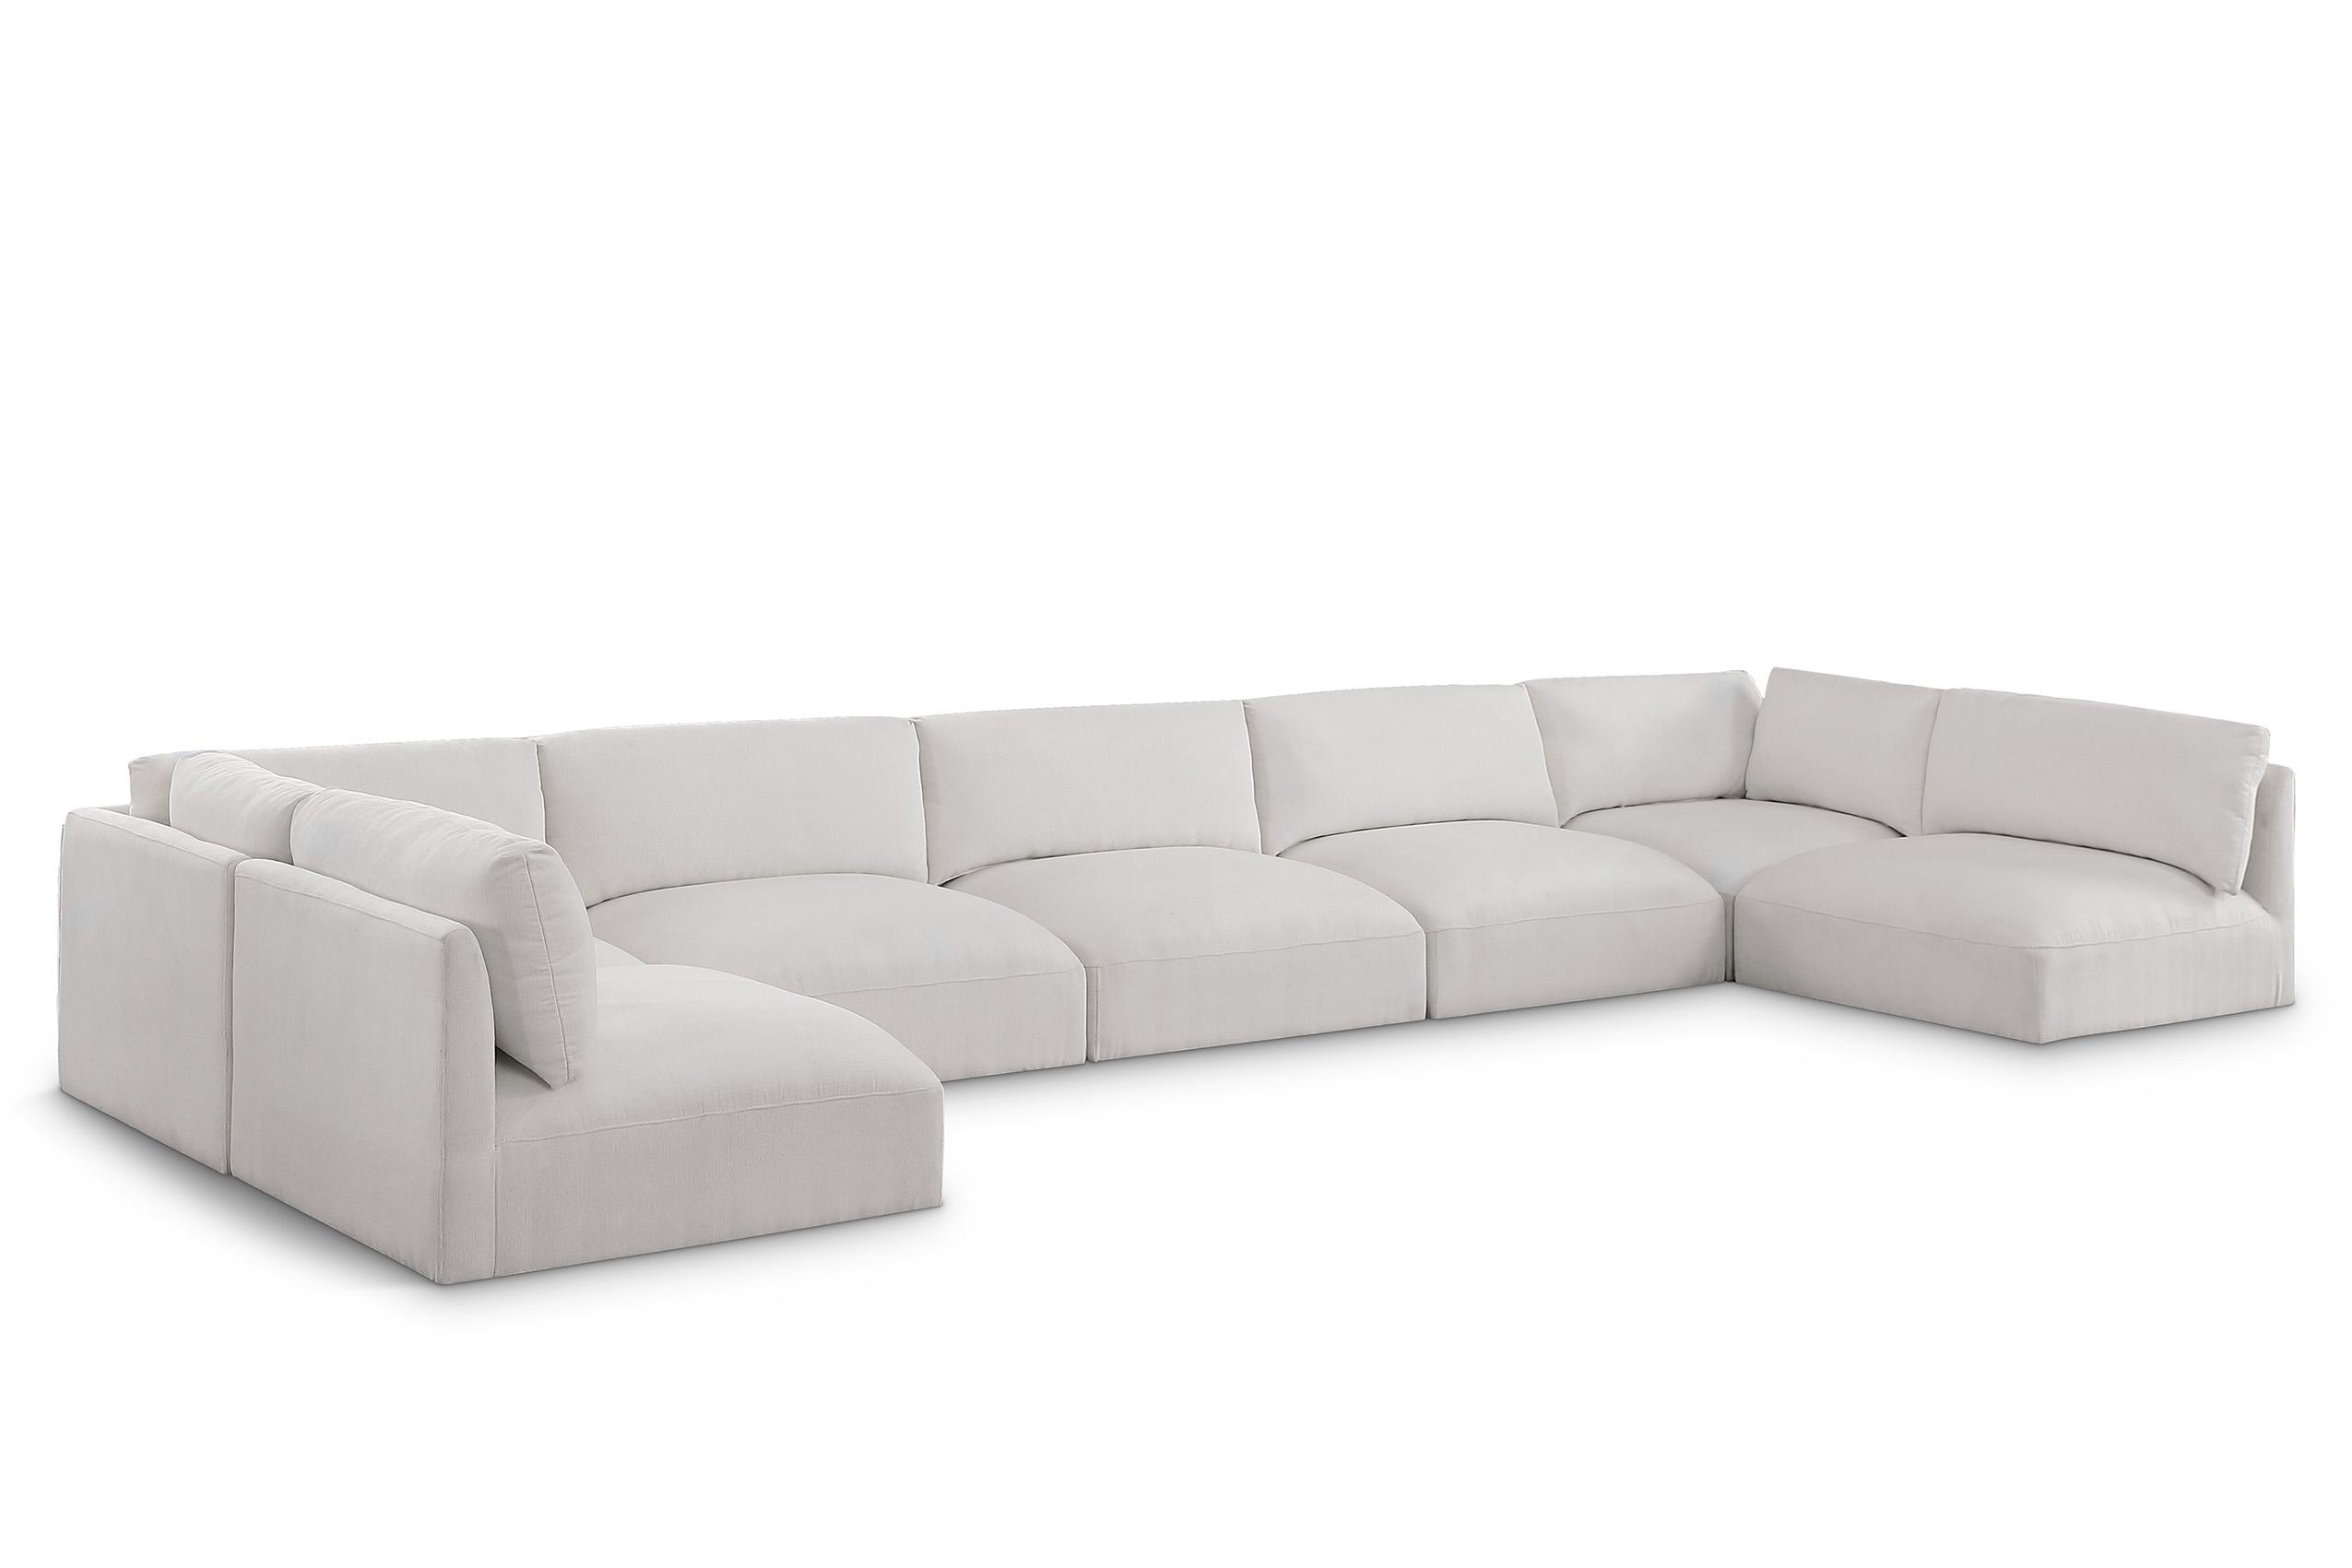 Contemporary, Modern Modular Sectional Sofa EASE 696Cream-Sec7B 696Cream-Sec7B in Cream Fabric